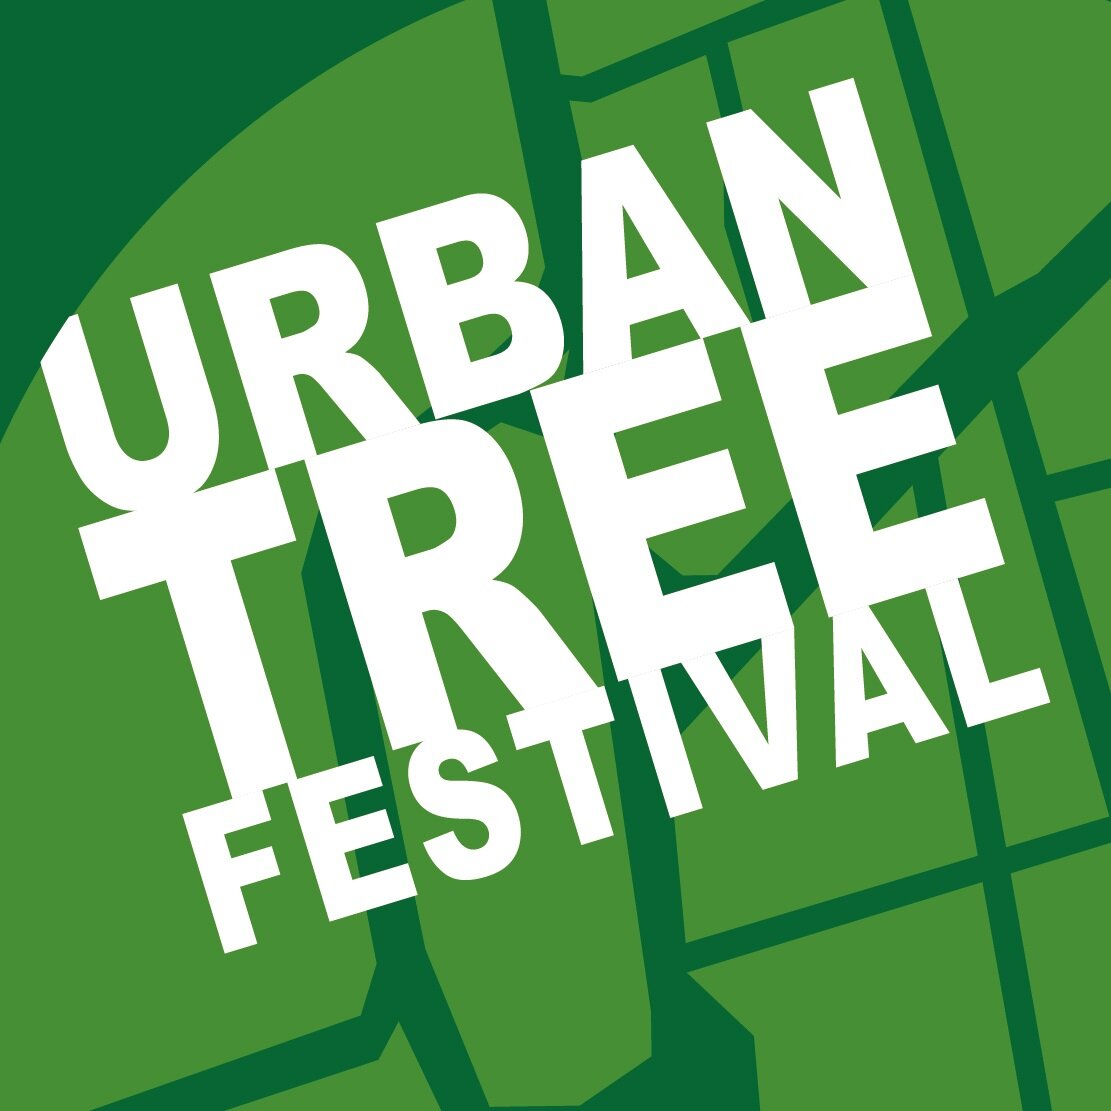 Urban tree fest logo square.jpg